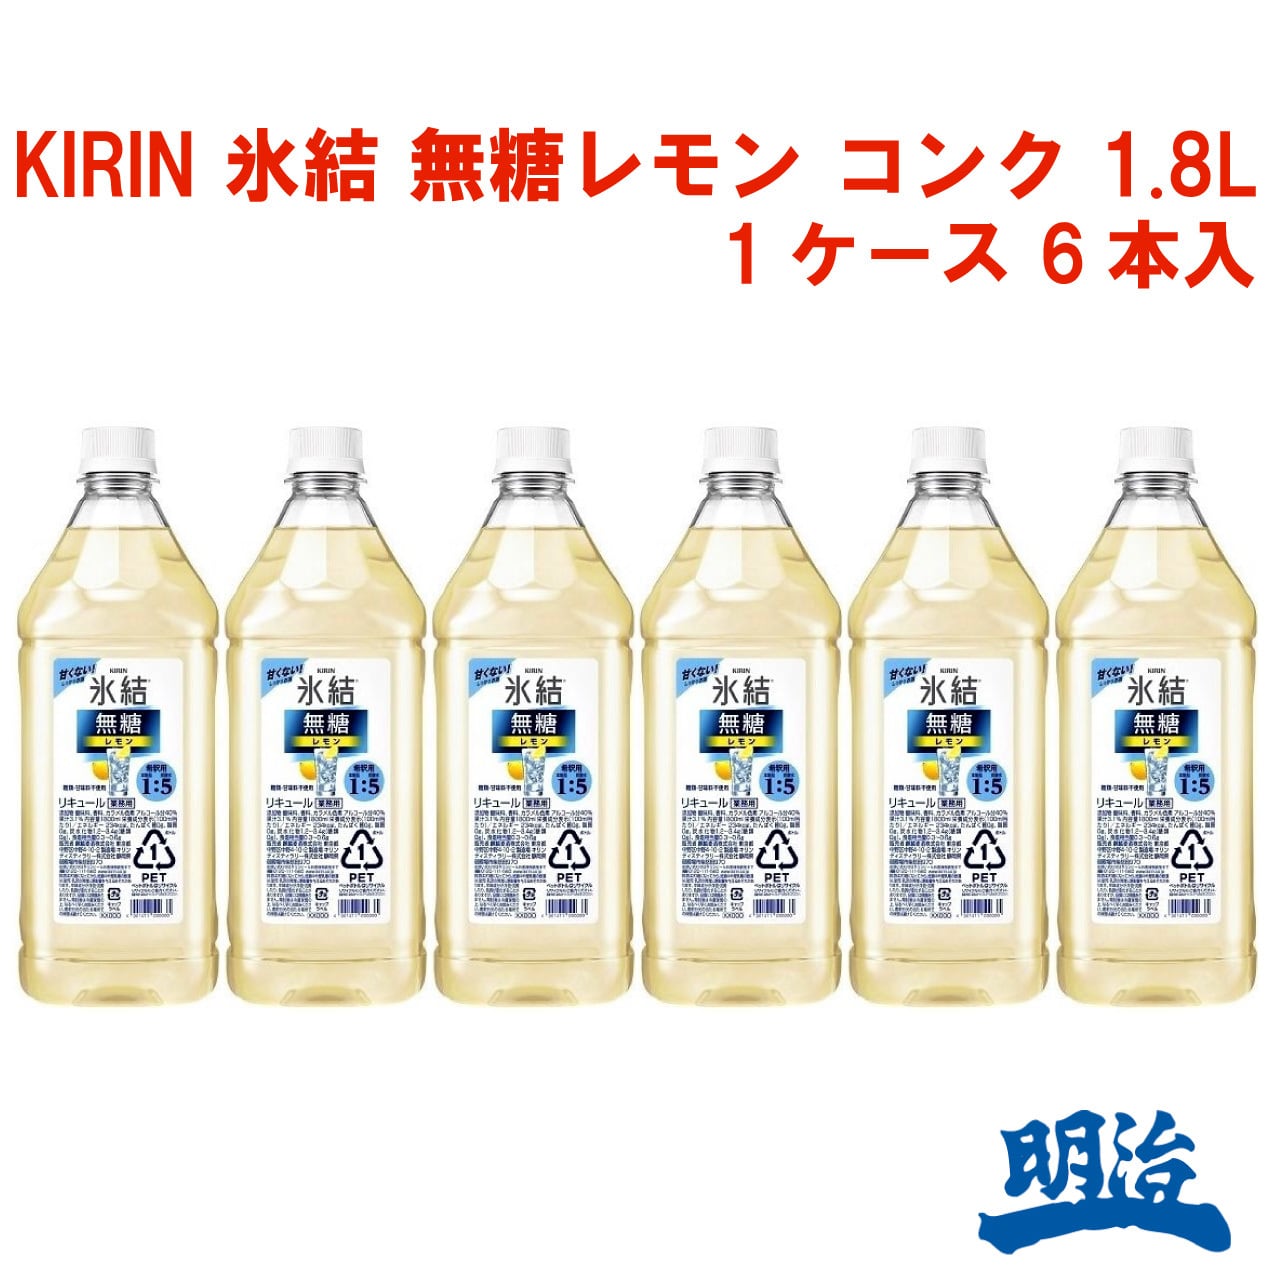 KIRIN 氷結 無糖レモン コンク 1.8L 1ケース 6本入